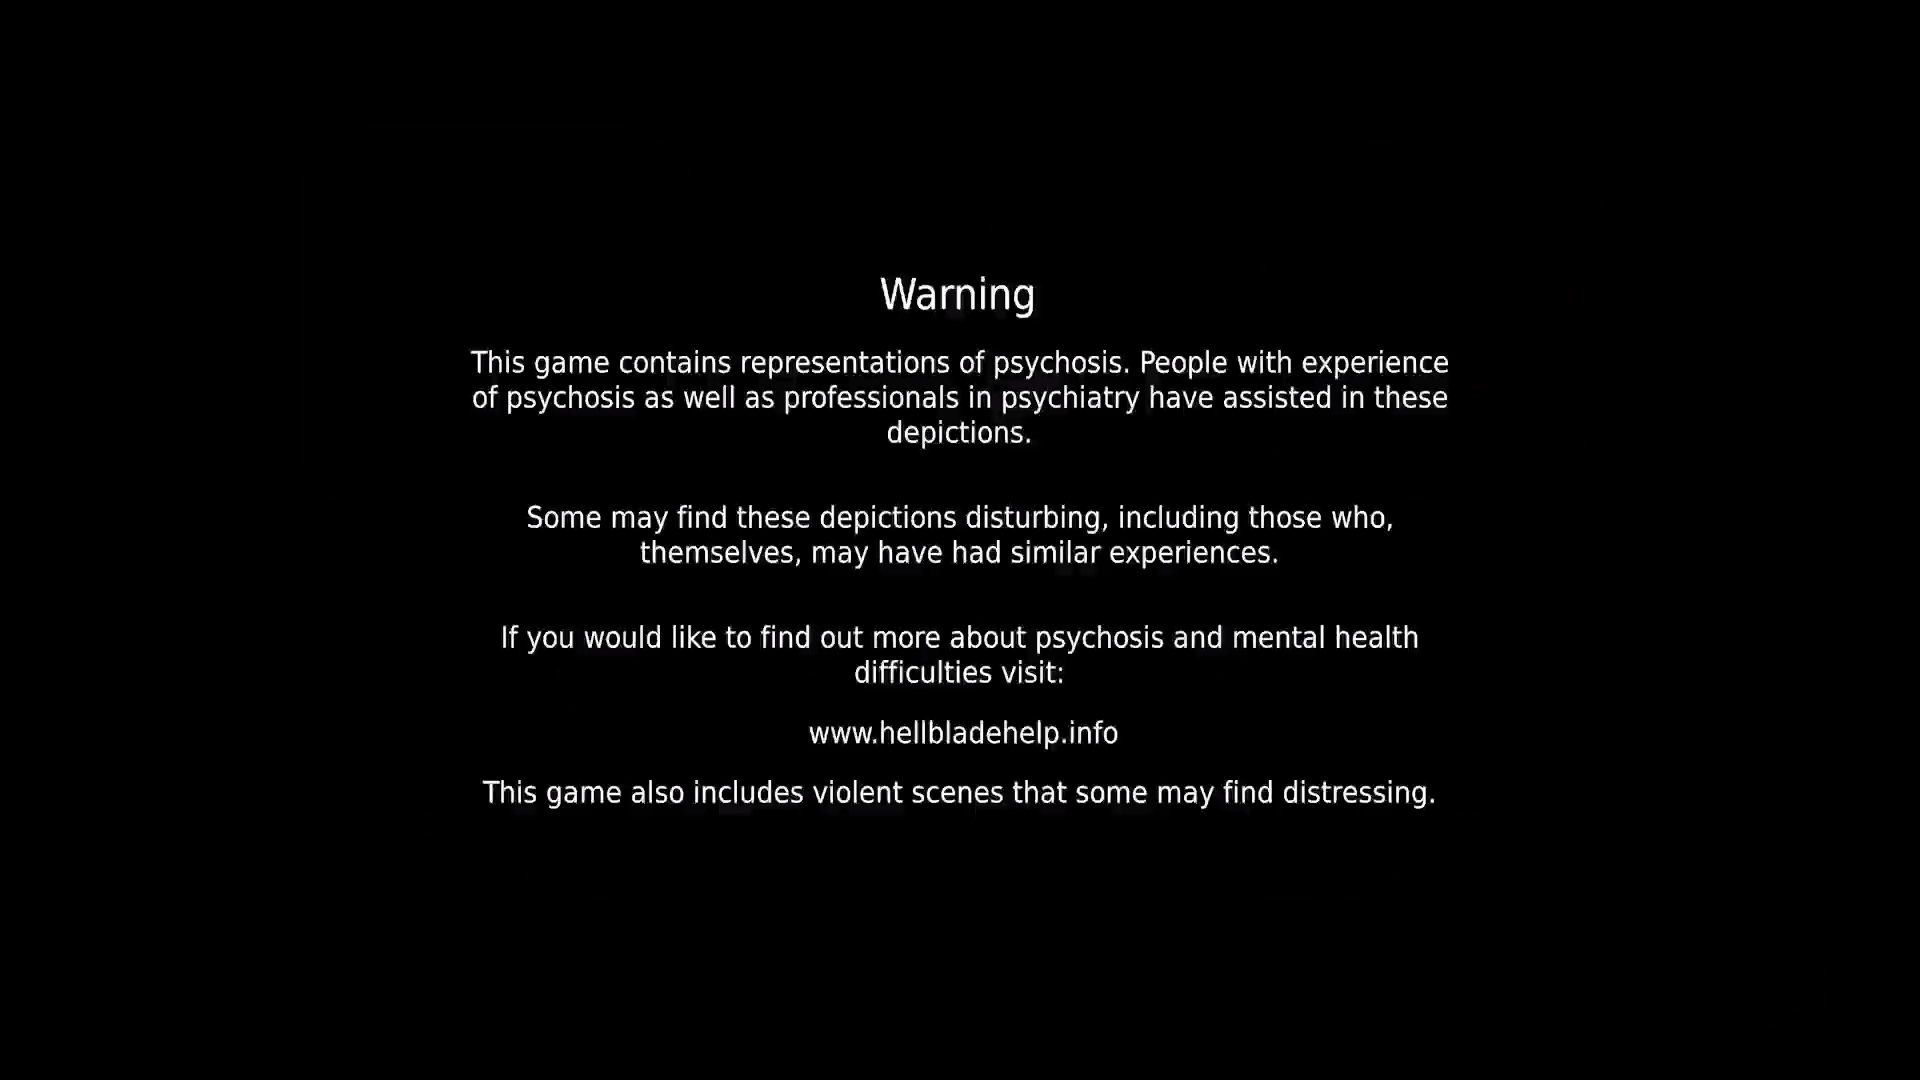 Hellblade Senua's Sacrifice의 스크린샷에는 다음과 같은 경고 화면이 포함되어 있습니다. 